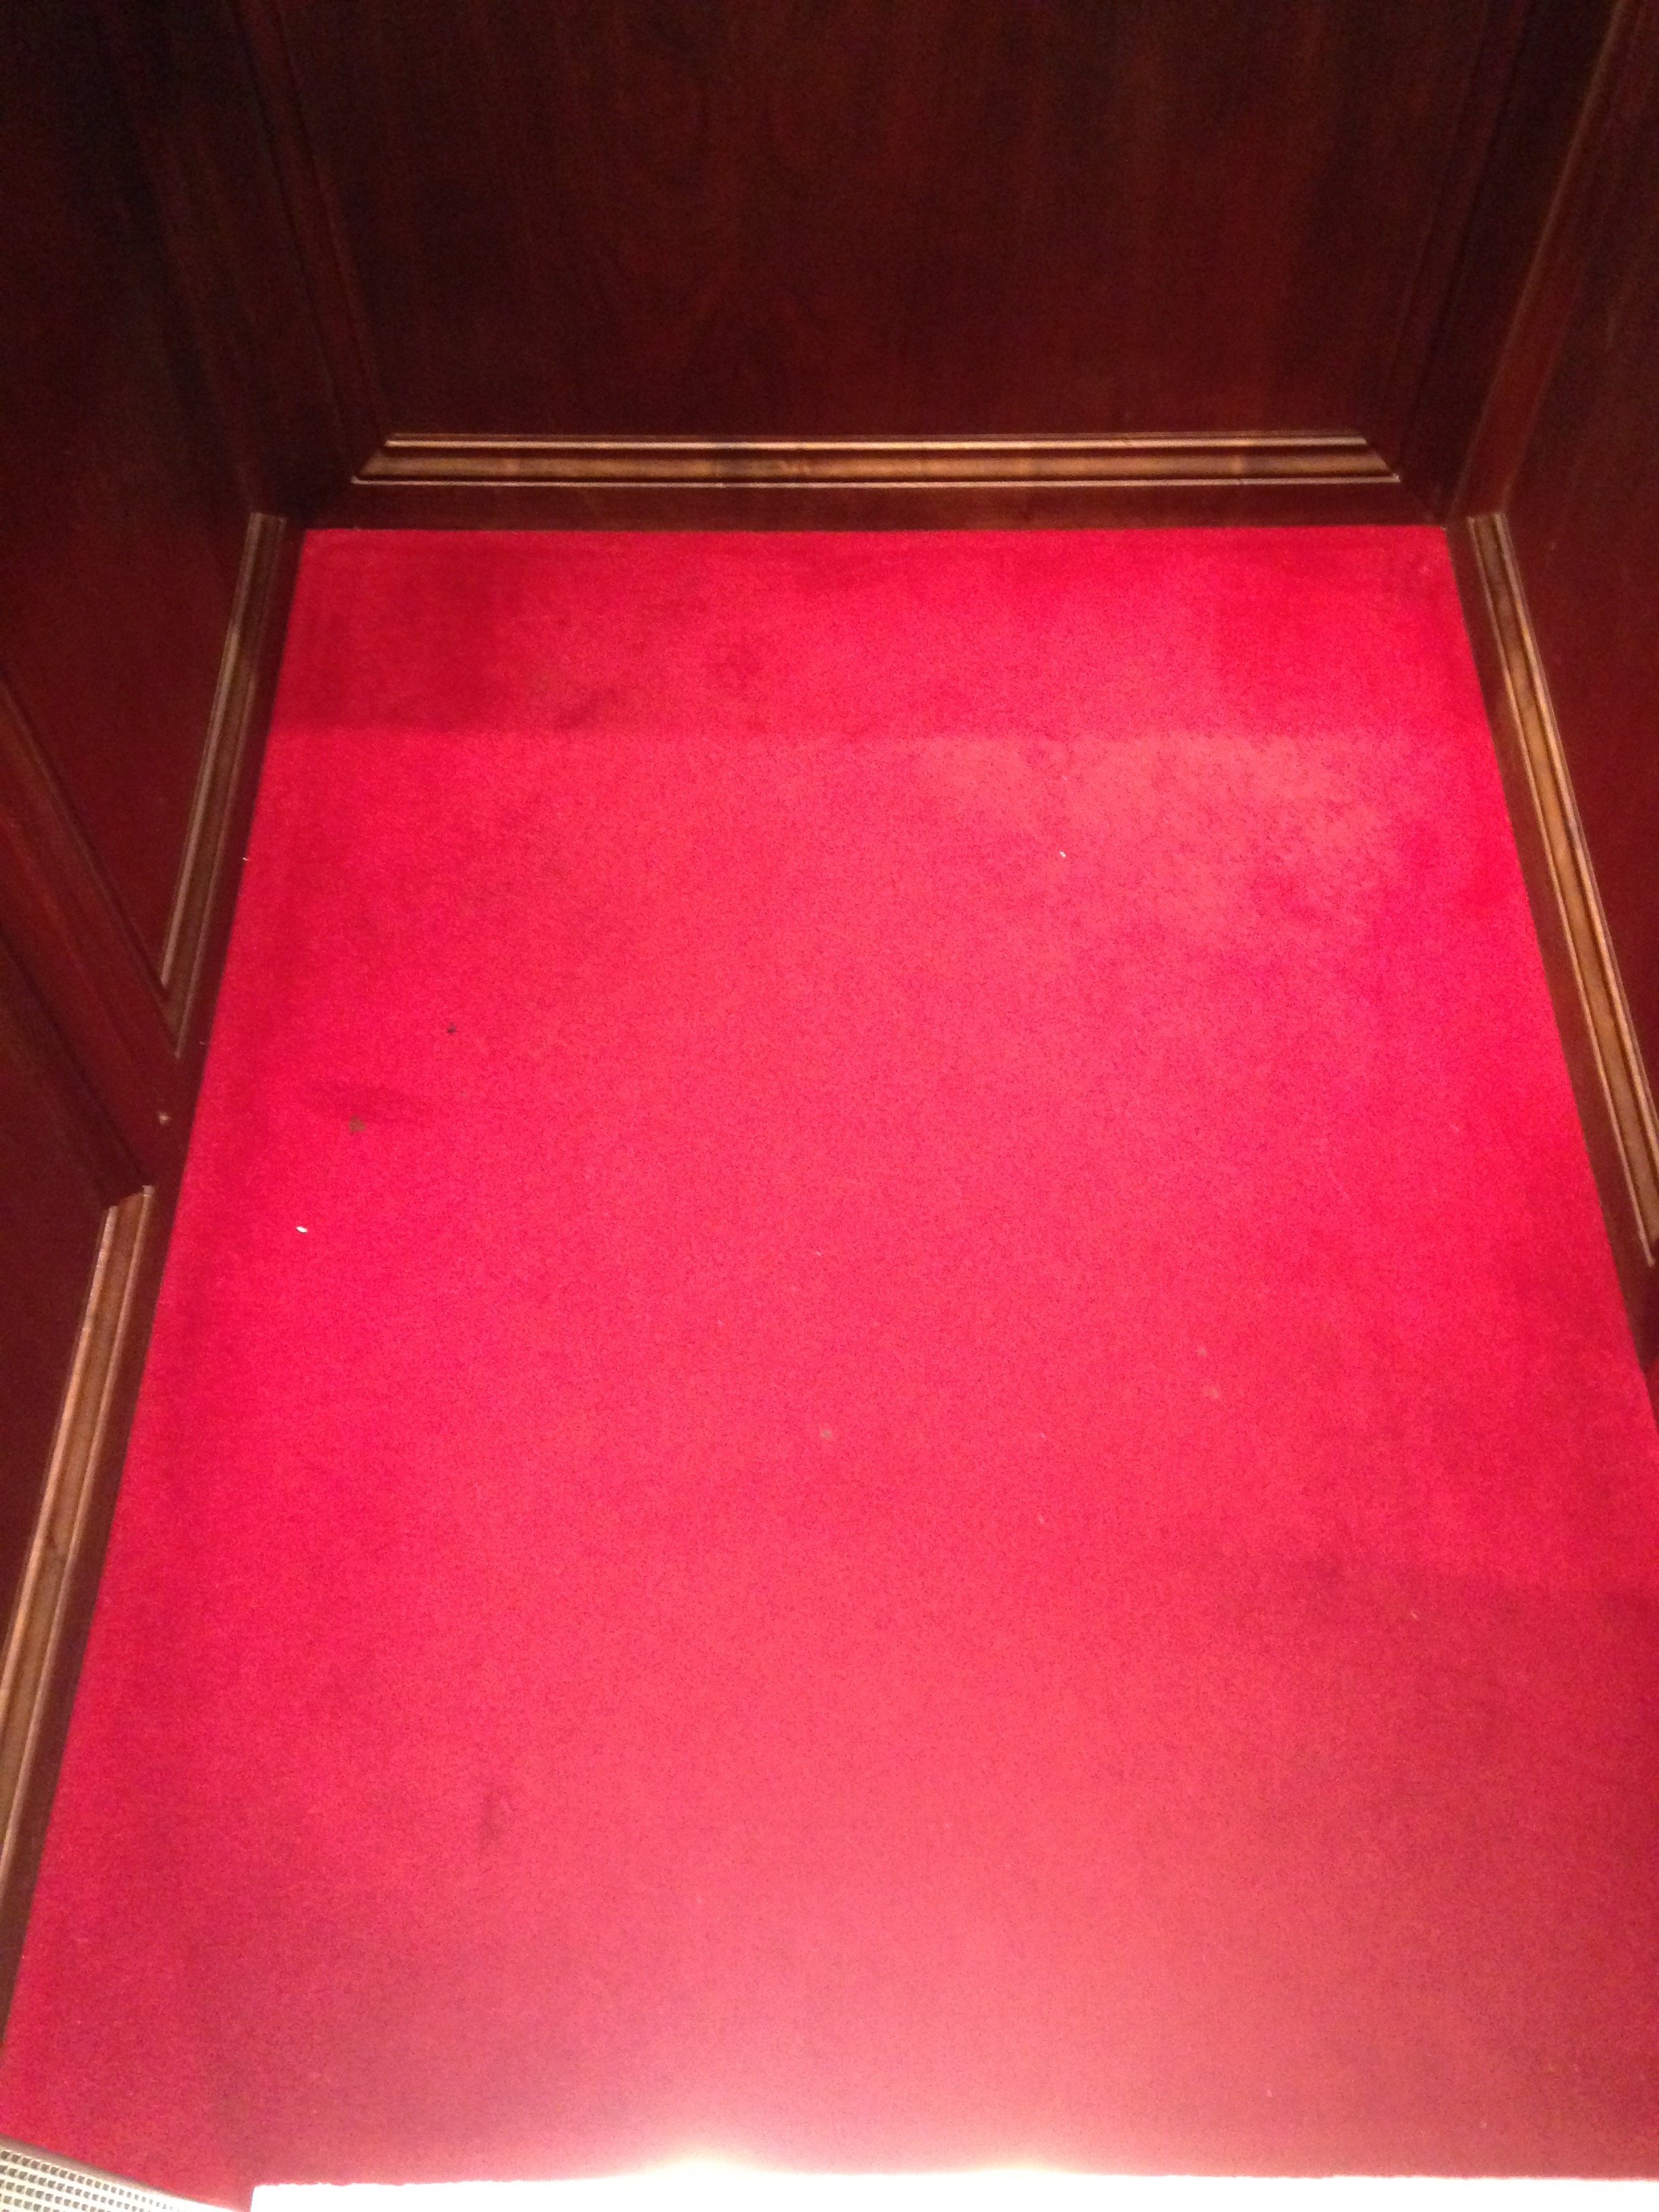 dirty+carpet+in+the+lift.jpg